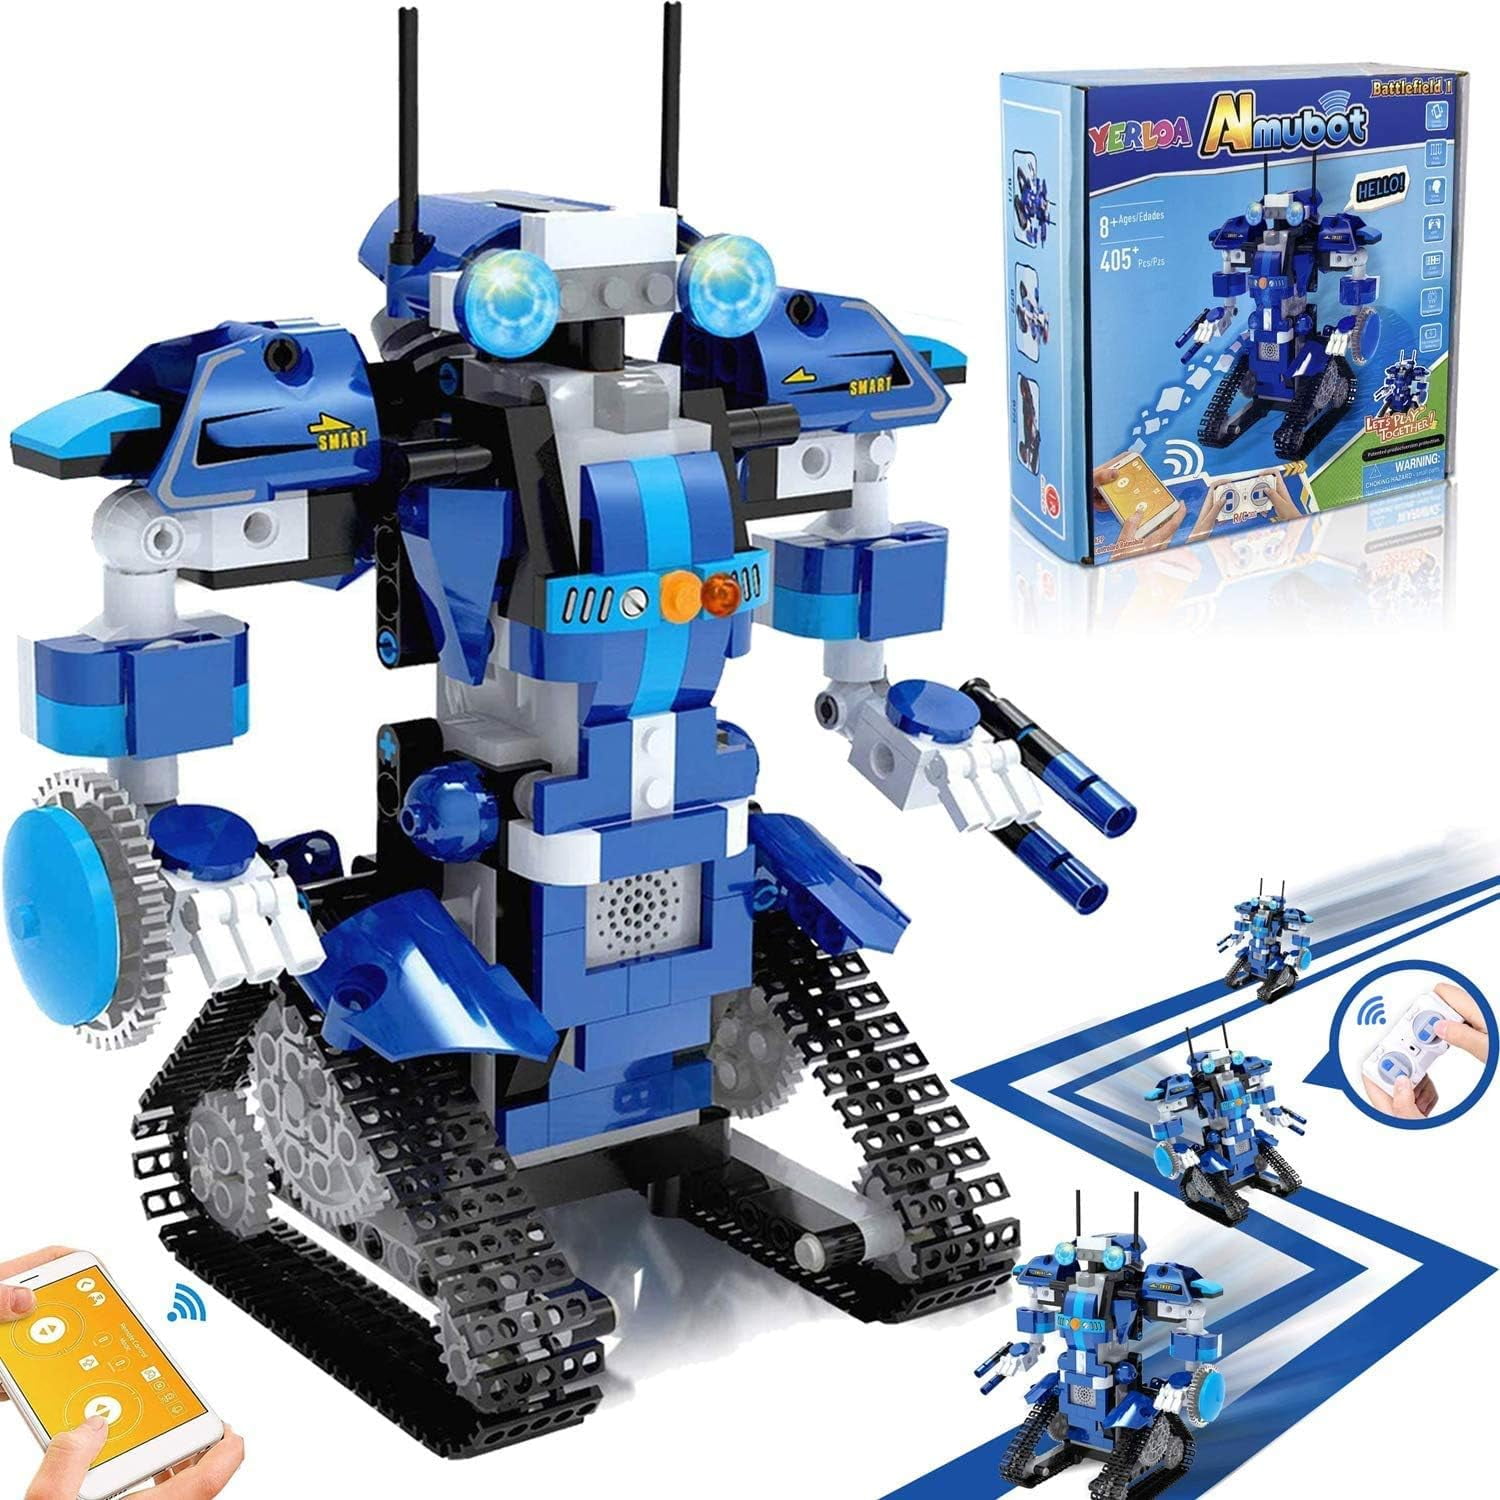 PAI Technology Botzees Robotics Mini Coding Robot Set Stem Toy Coding Robot for Kids Programming Robot Set for Boys Girls Ages 3+